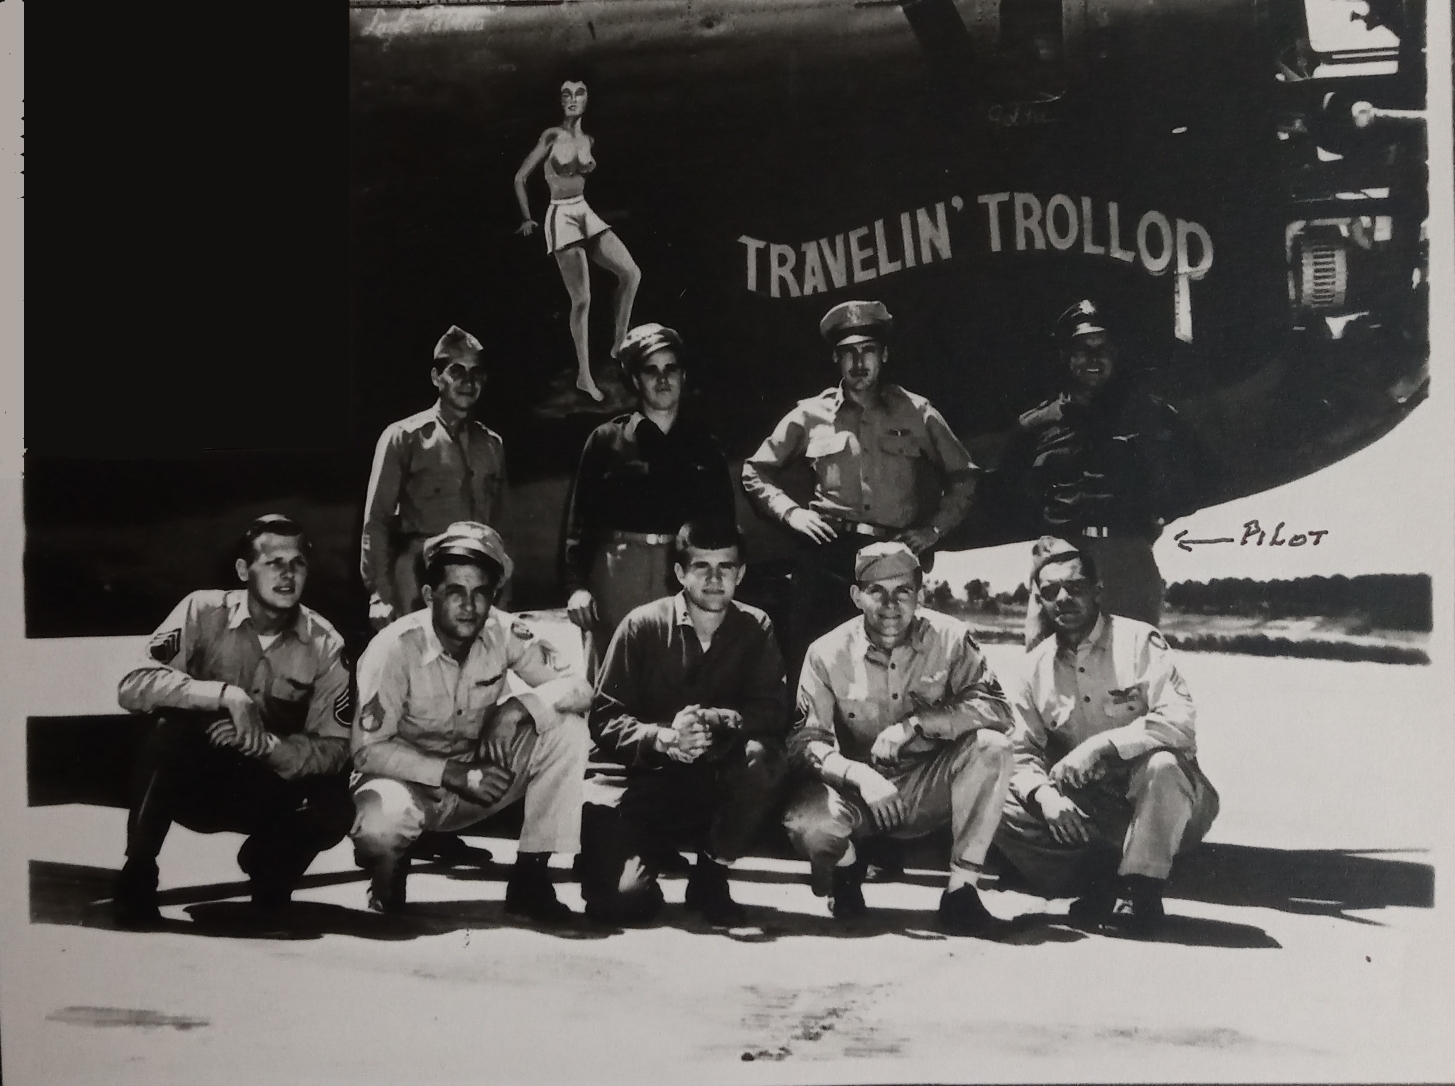 Crew of Travellin Trollop